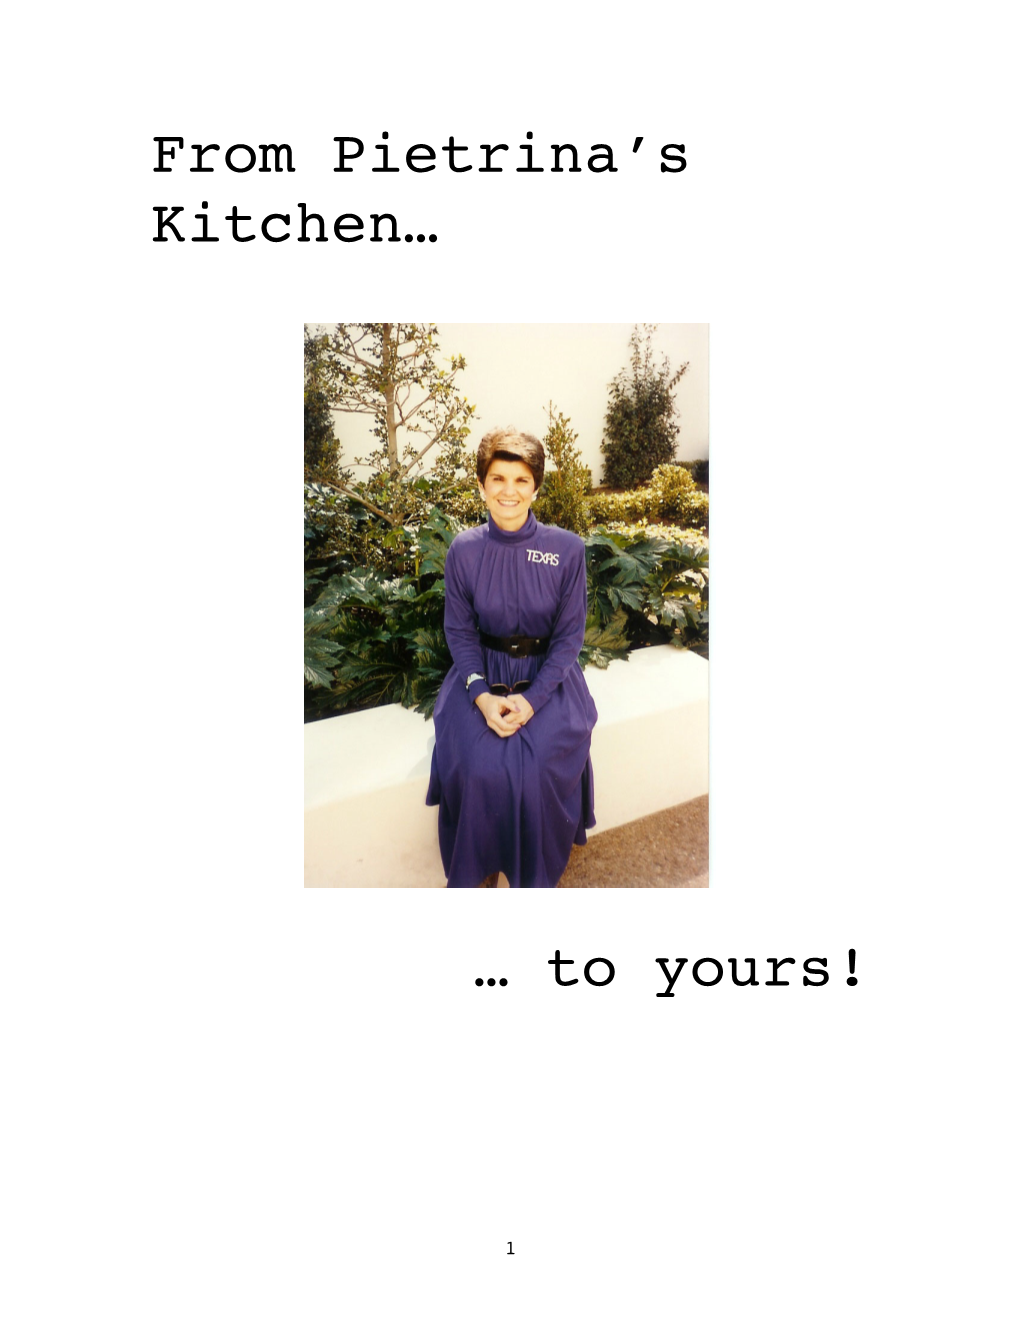 Pietrina's Cookbook